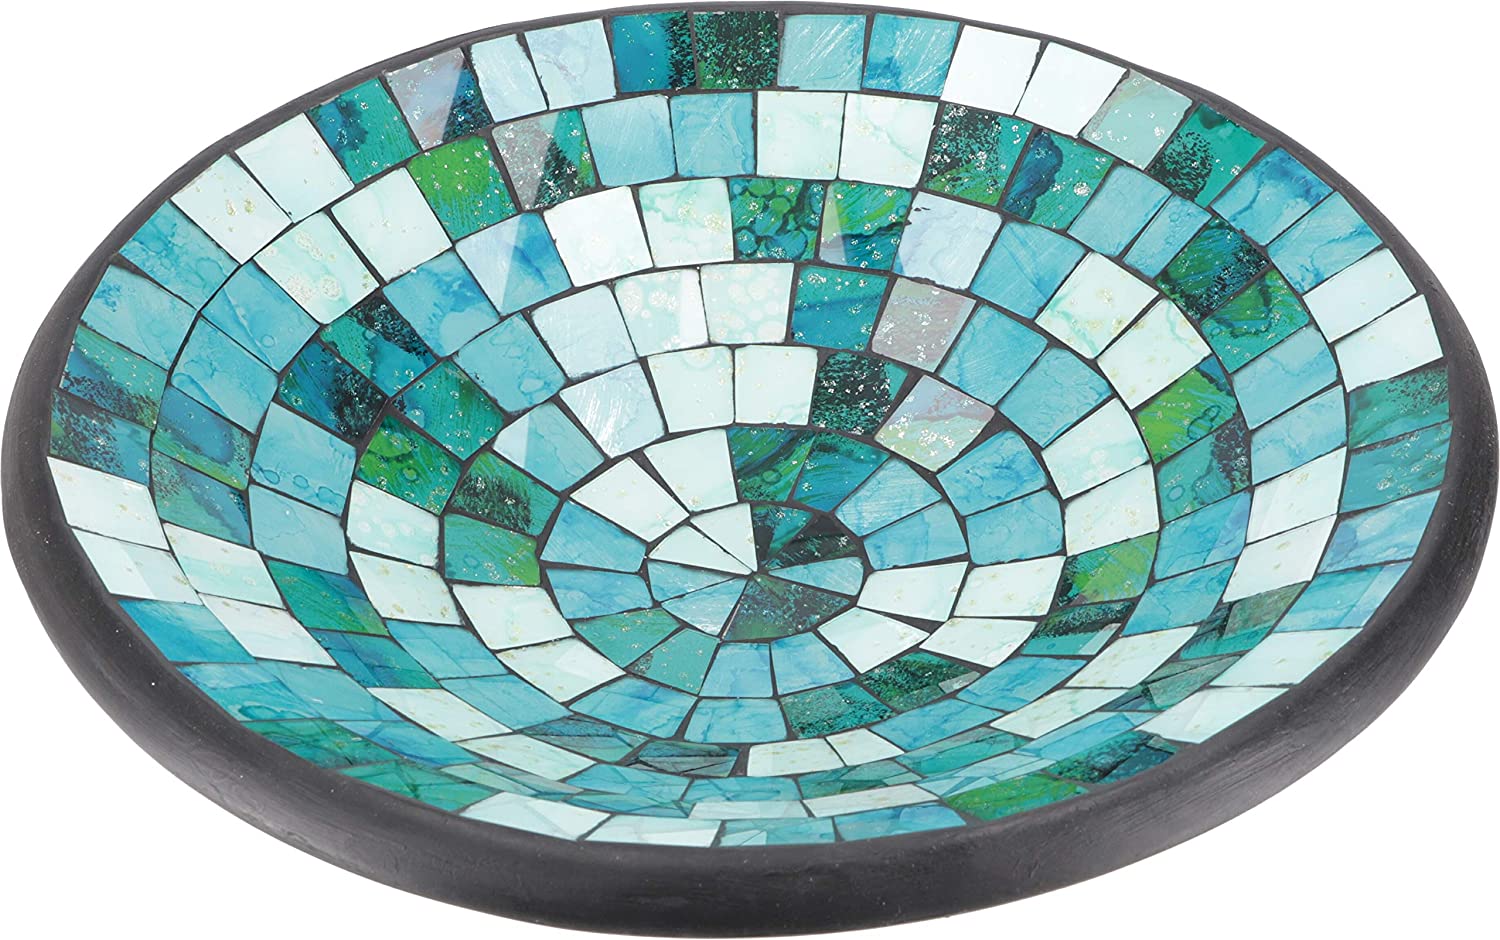 Guru-Shop GURU SHOP Round Mosaic Bowl, Coaster, Decorative Bowl, Handmade Ceramic & Glass Fruit Bowl, Design 24, Multicoloured, Size: Small (Diameter 29 cm), Bowls